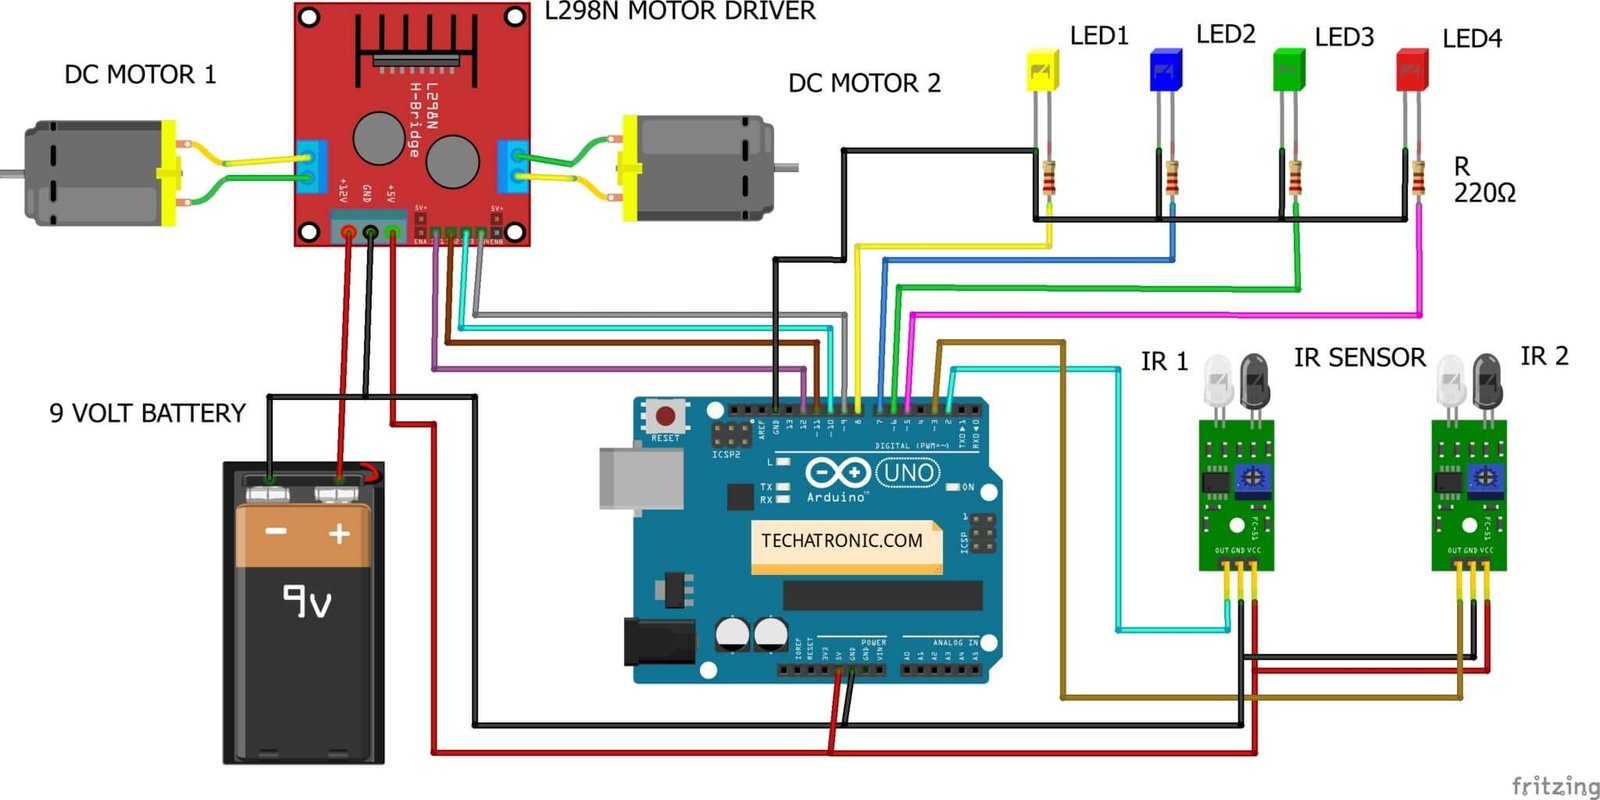 line follower robot fritzing circuit using l298n